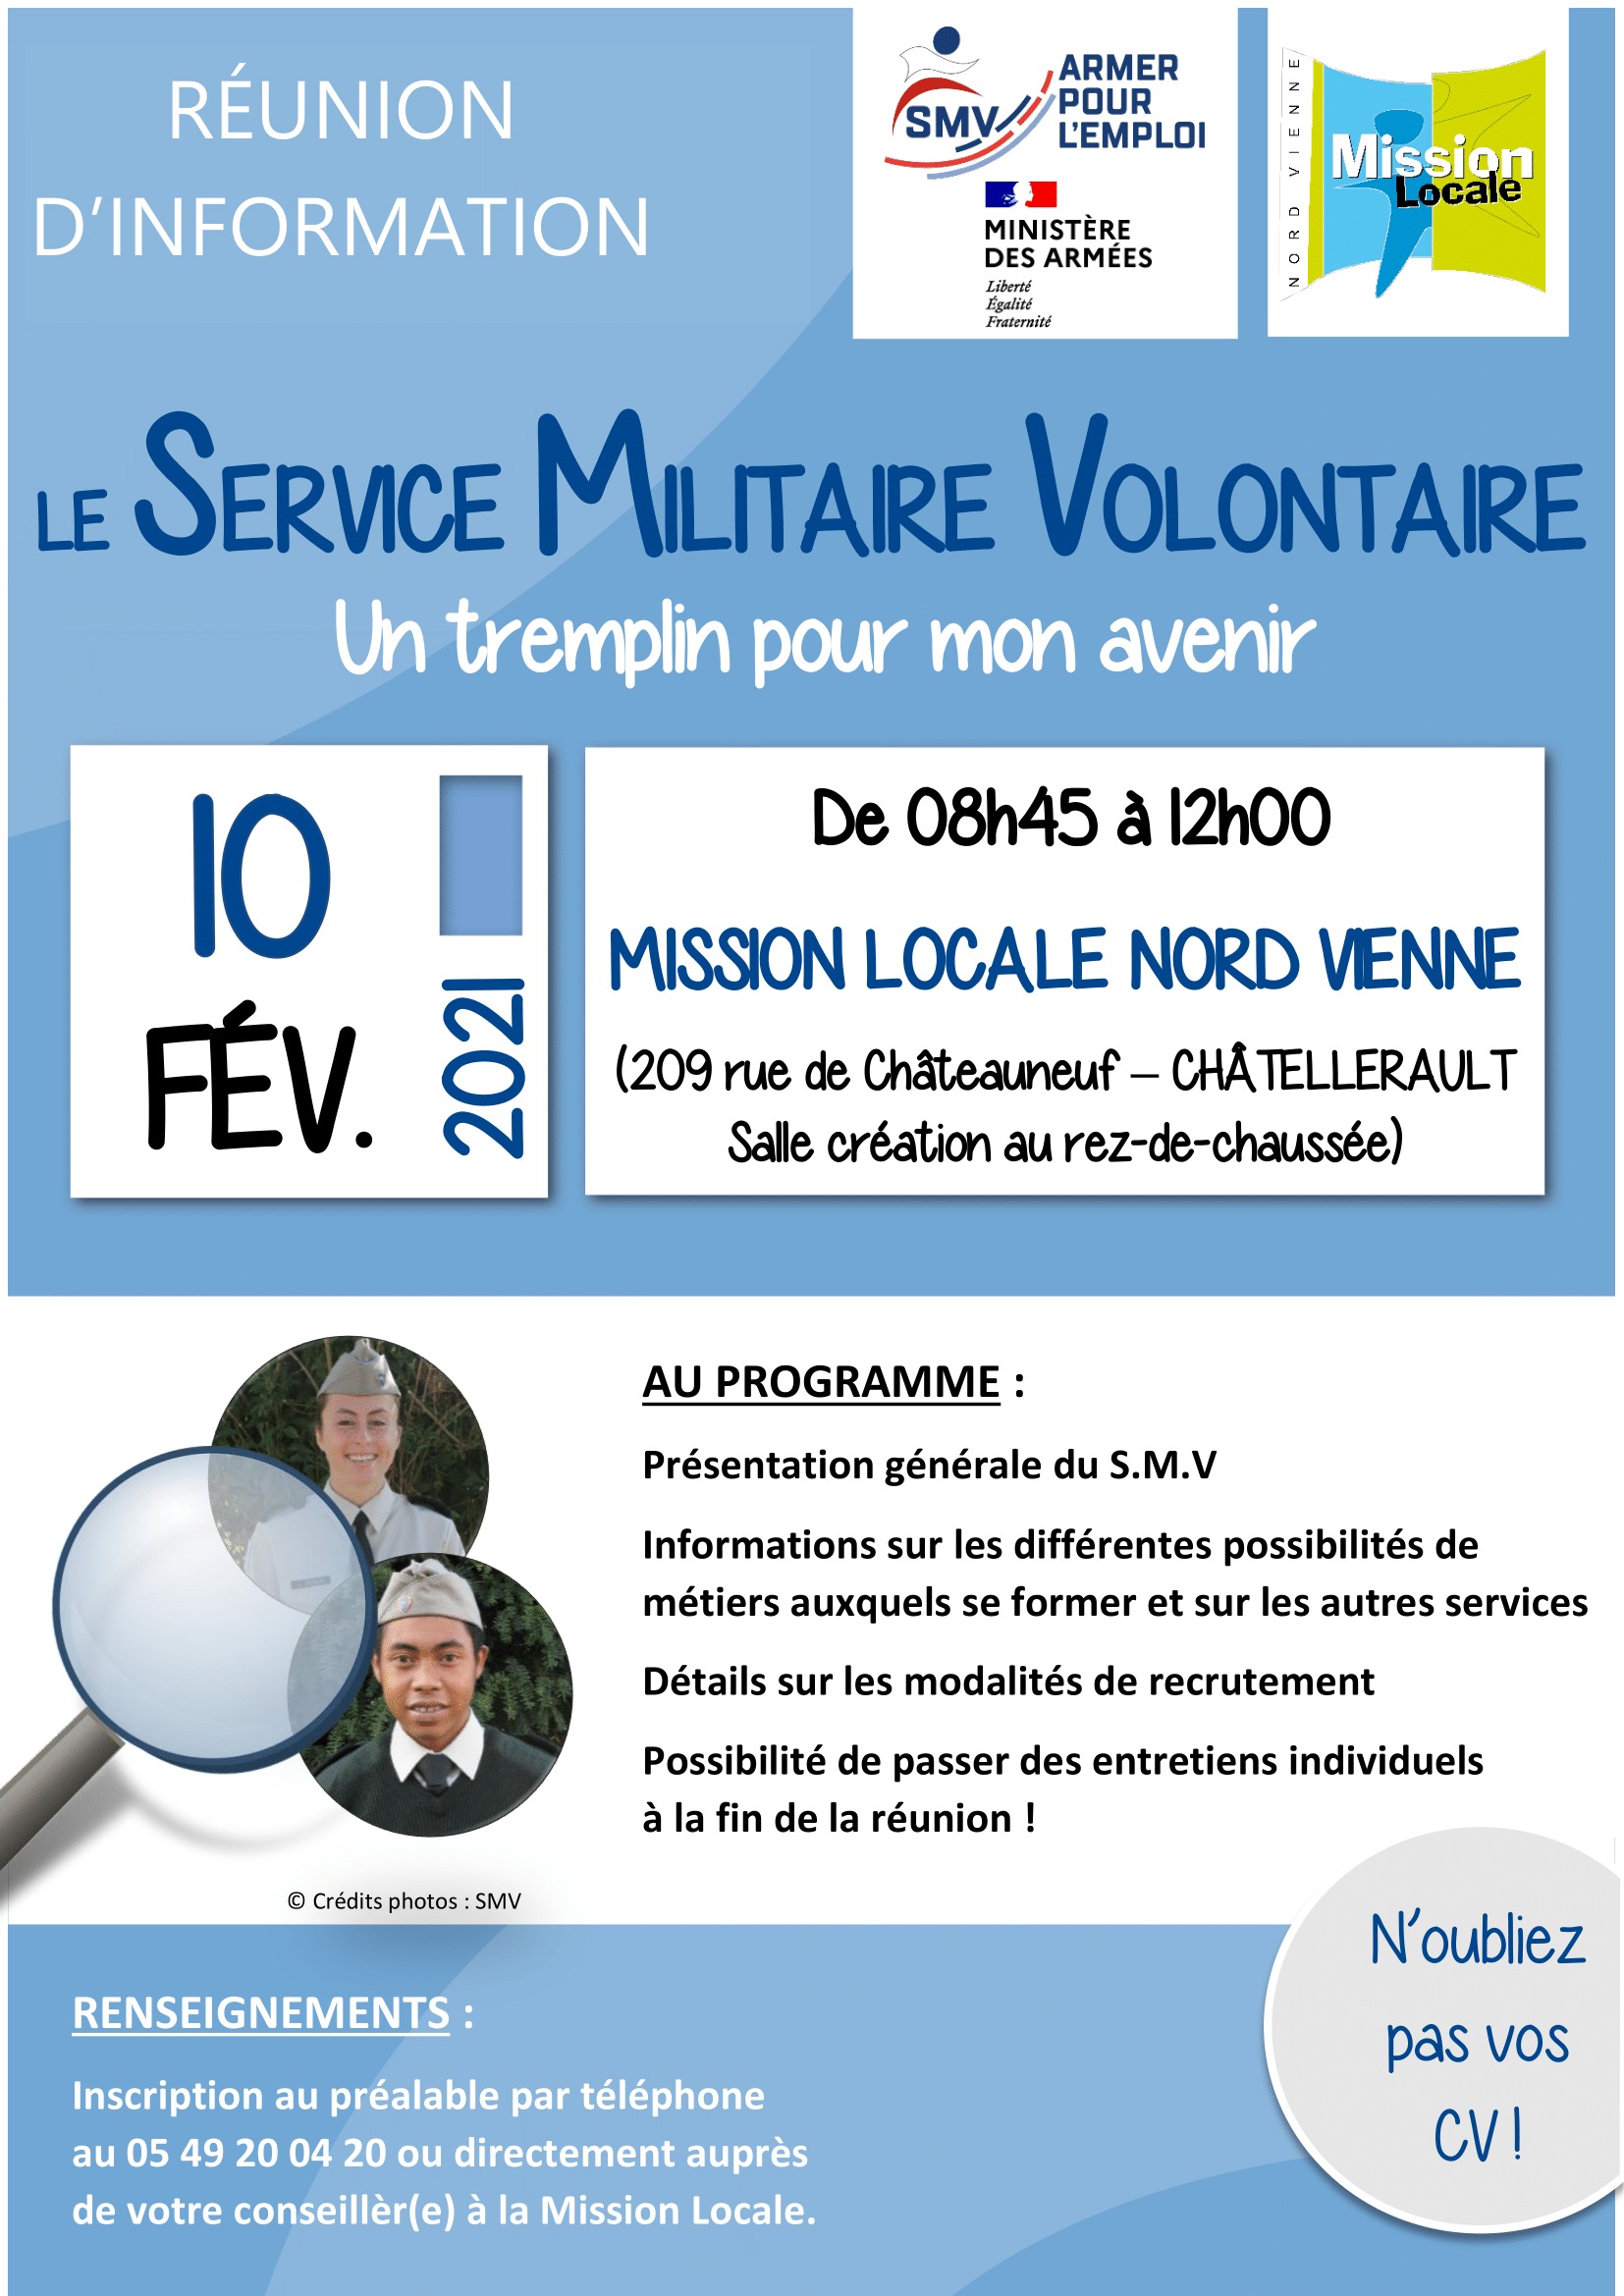 Information collective le Service Militaire Volontaire